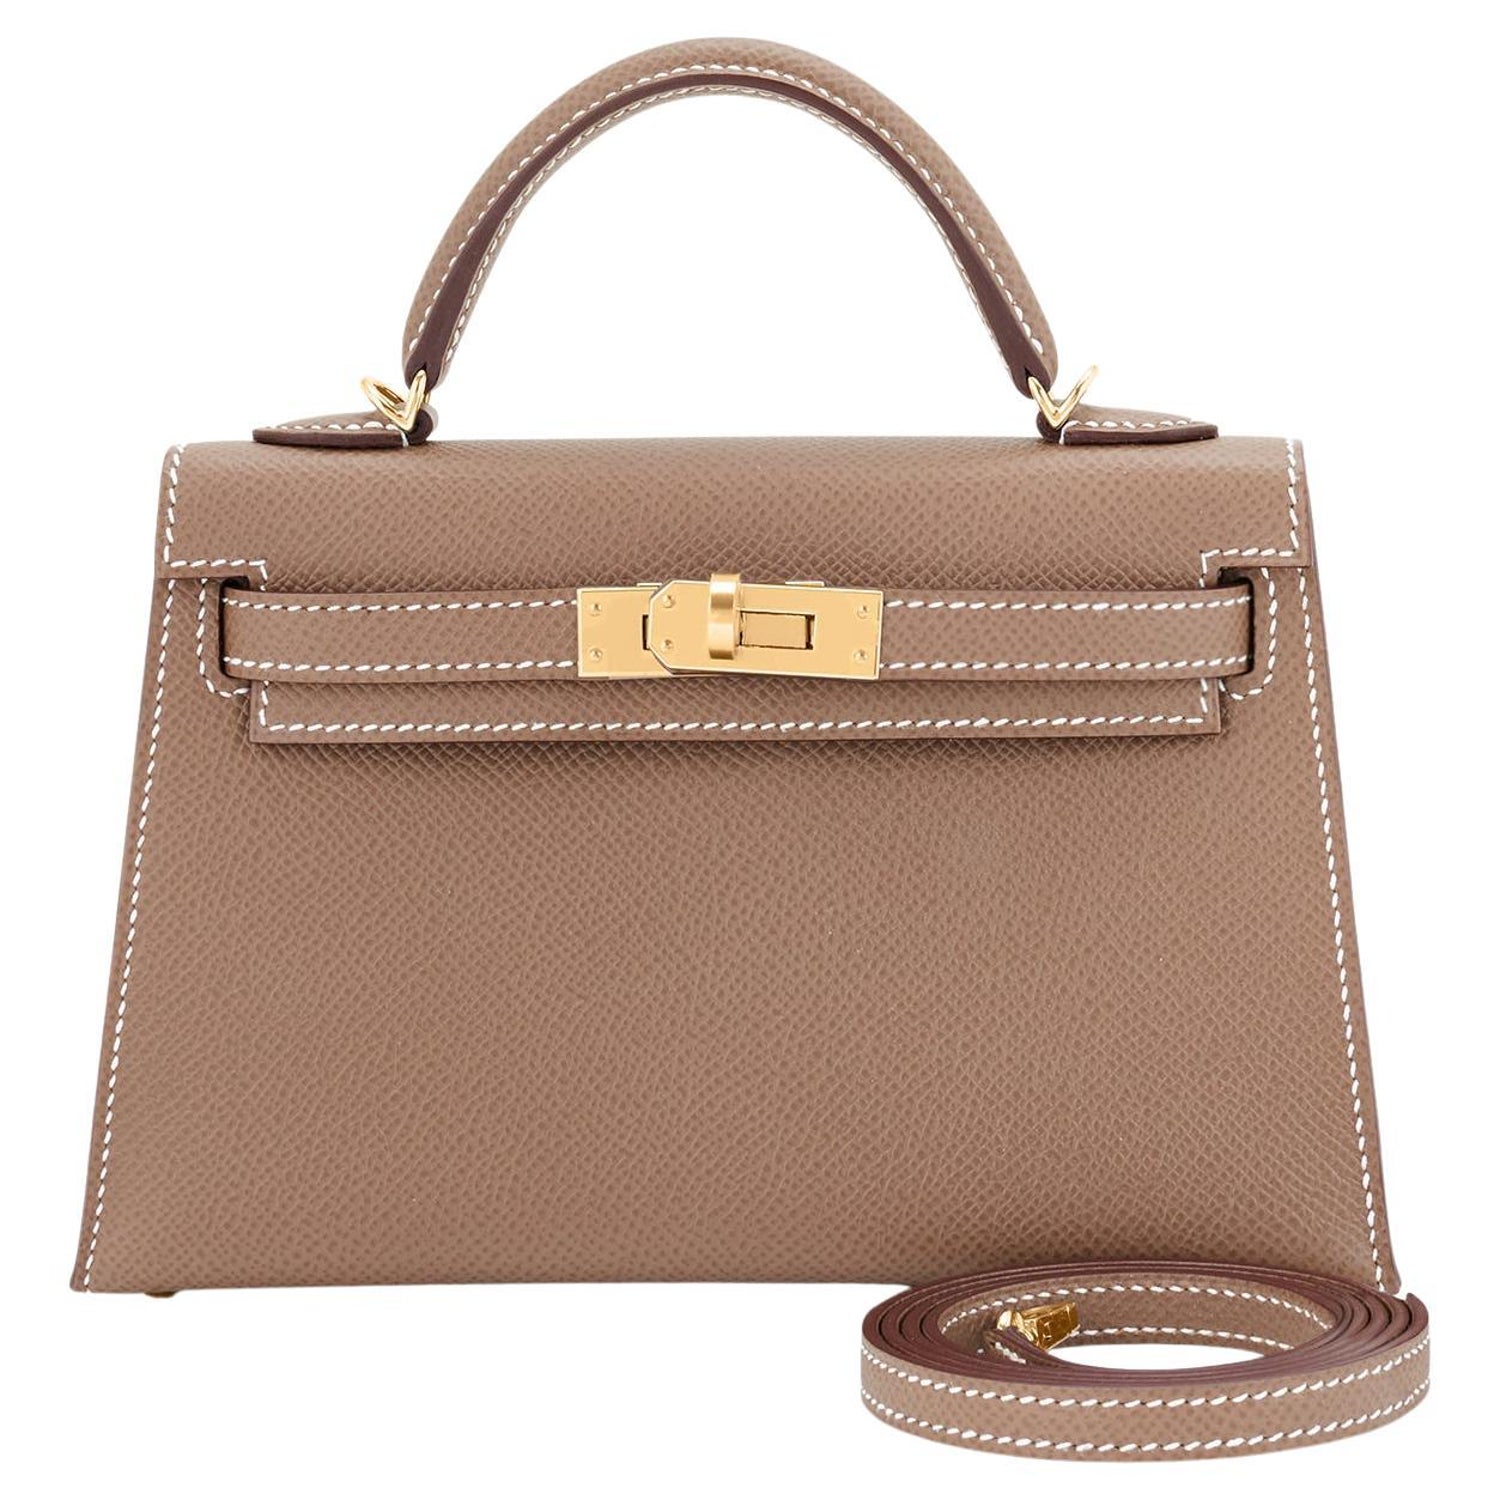 Evolution of the Hermès Mini Kelly Bag, Handbags and Accessories